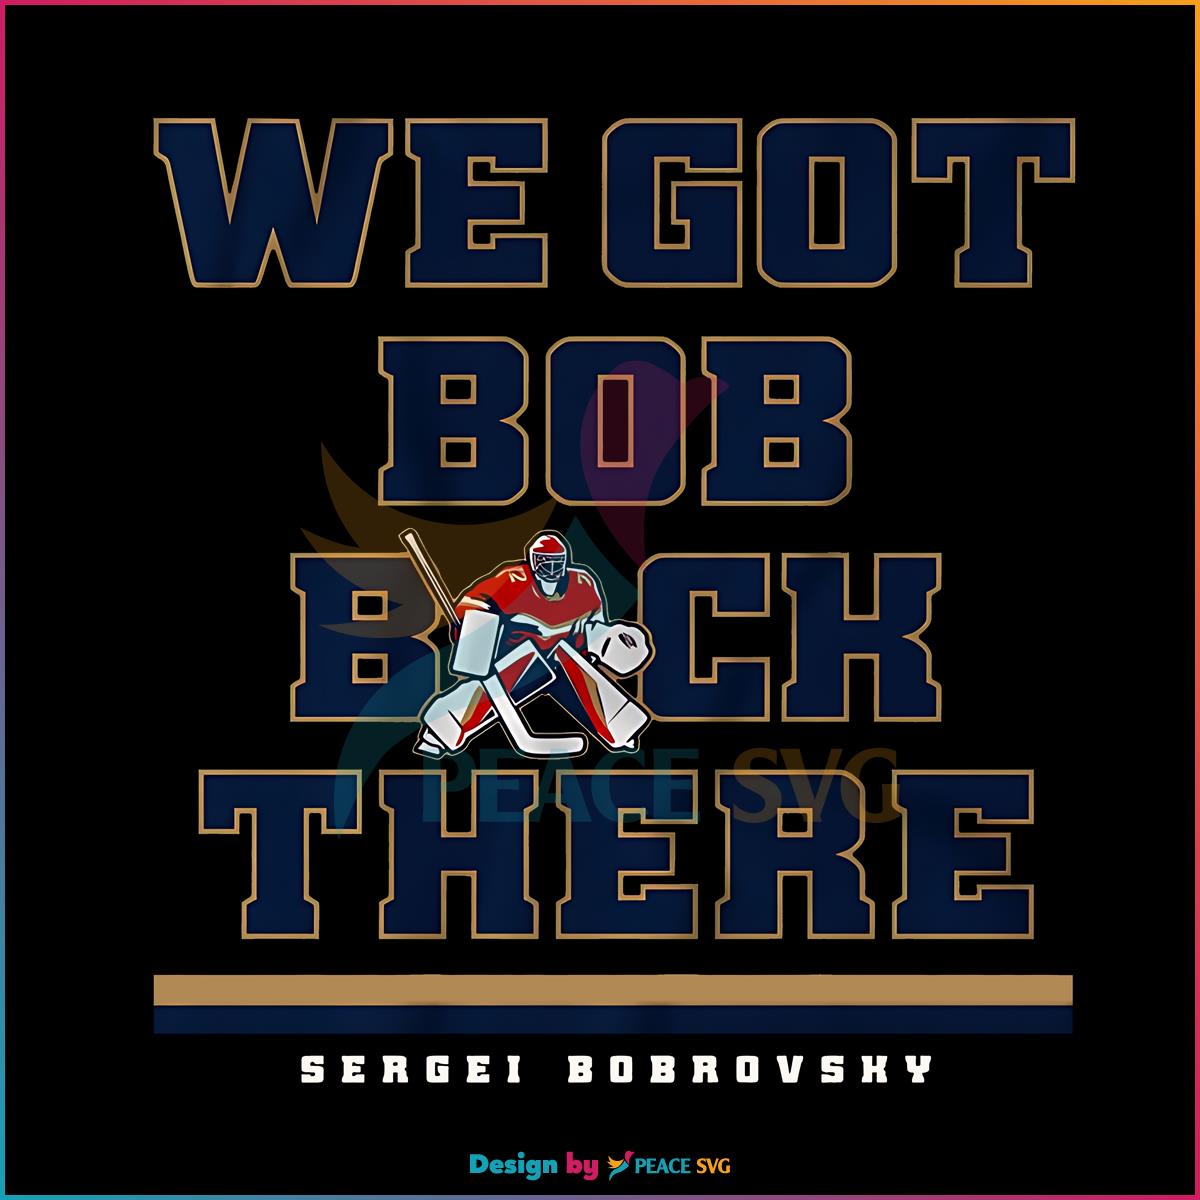 sergei-bobrovsky-we-got-bob-back-there-svg-graphic-design-files